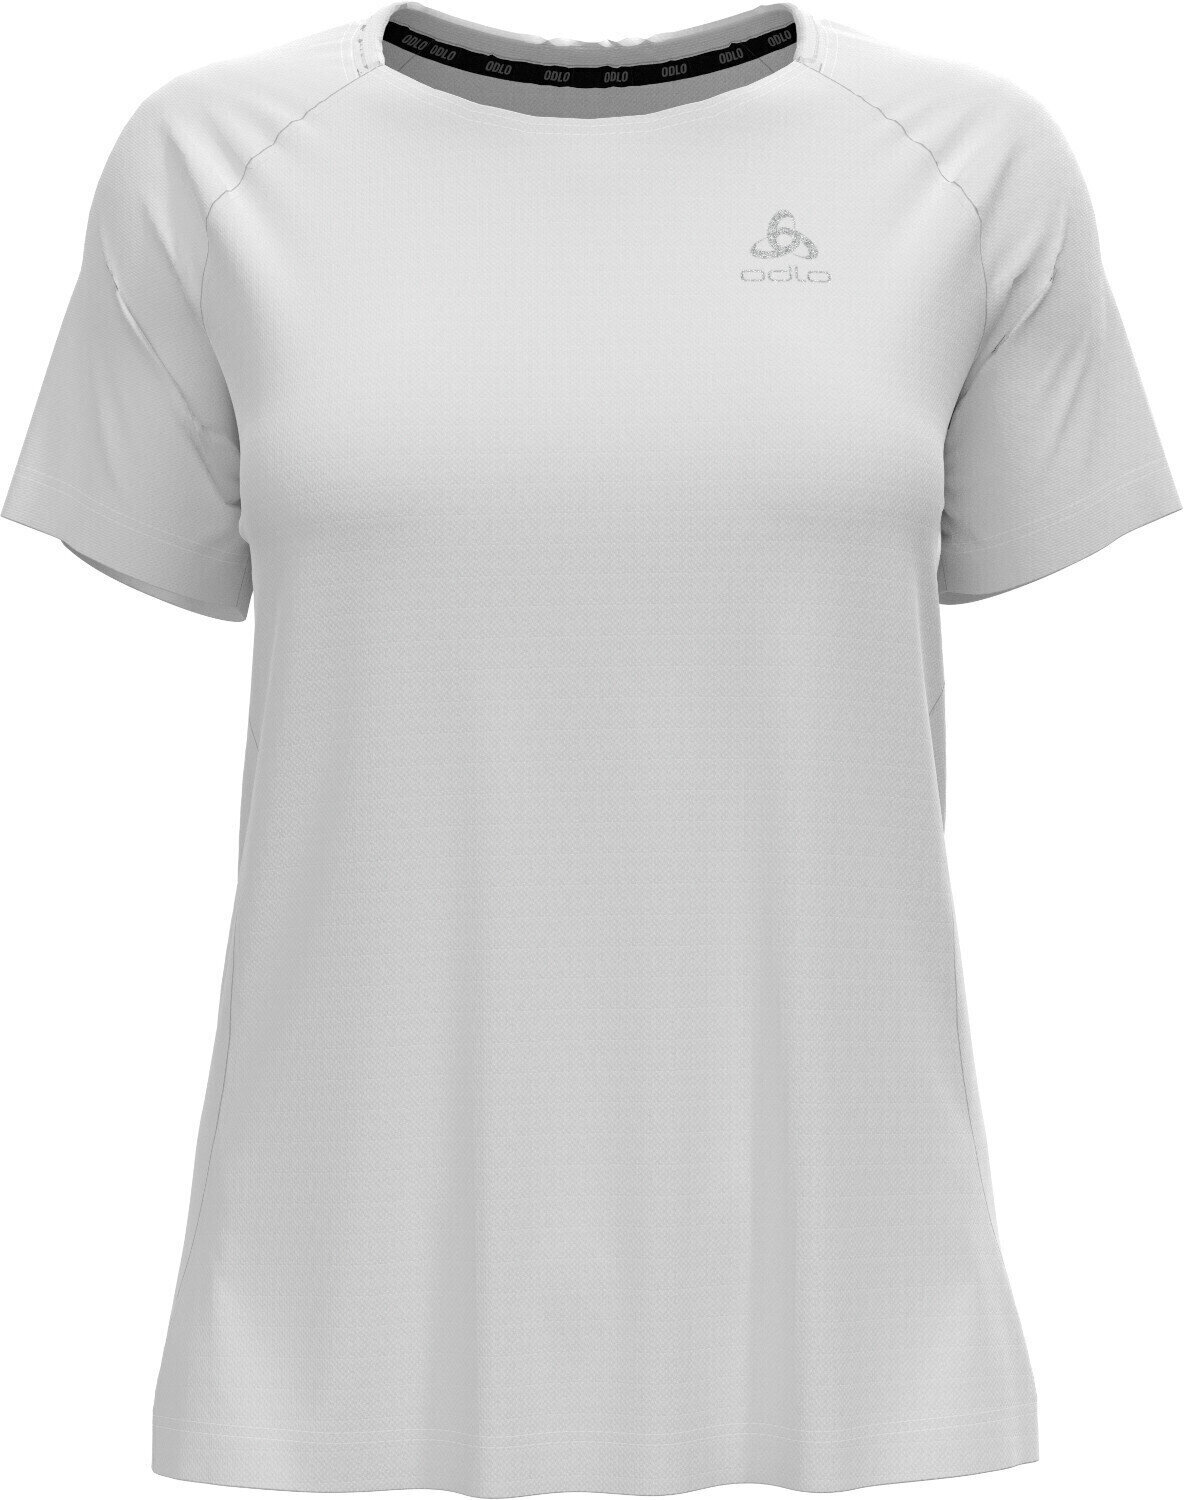 Laufshirt mit Kurzarm
 Odlo Essential T-Shirt White S Laufshirt mit Kurzarm